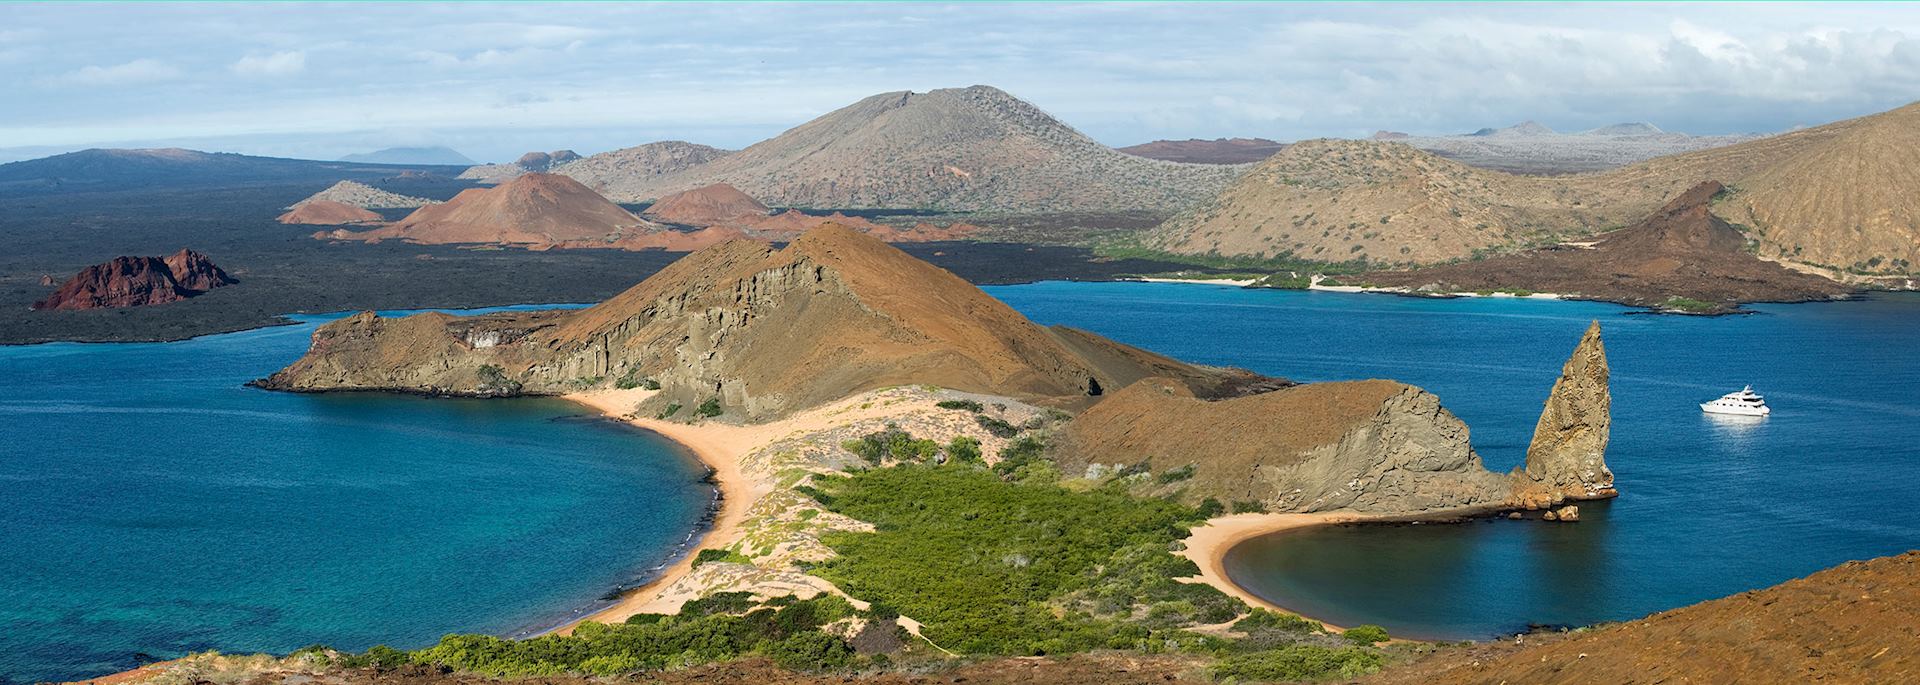 Bartolome Island, the Galapagos Islands